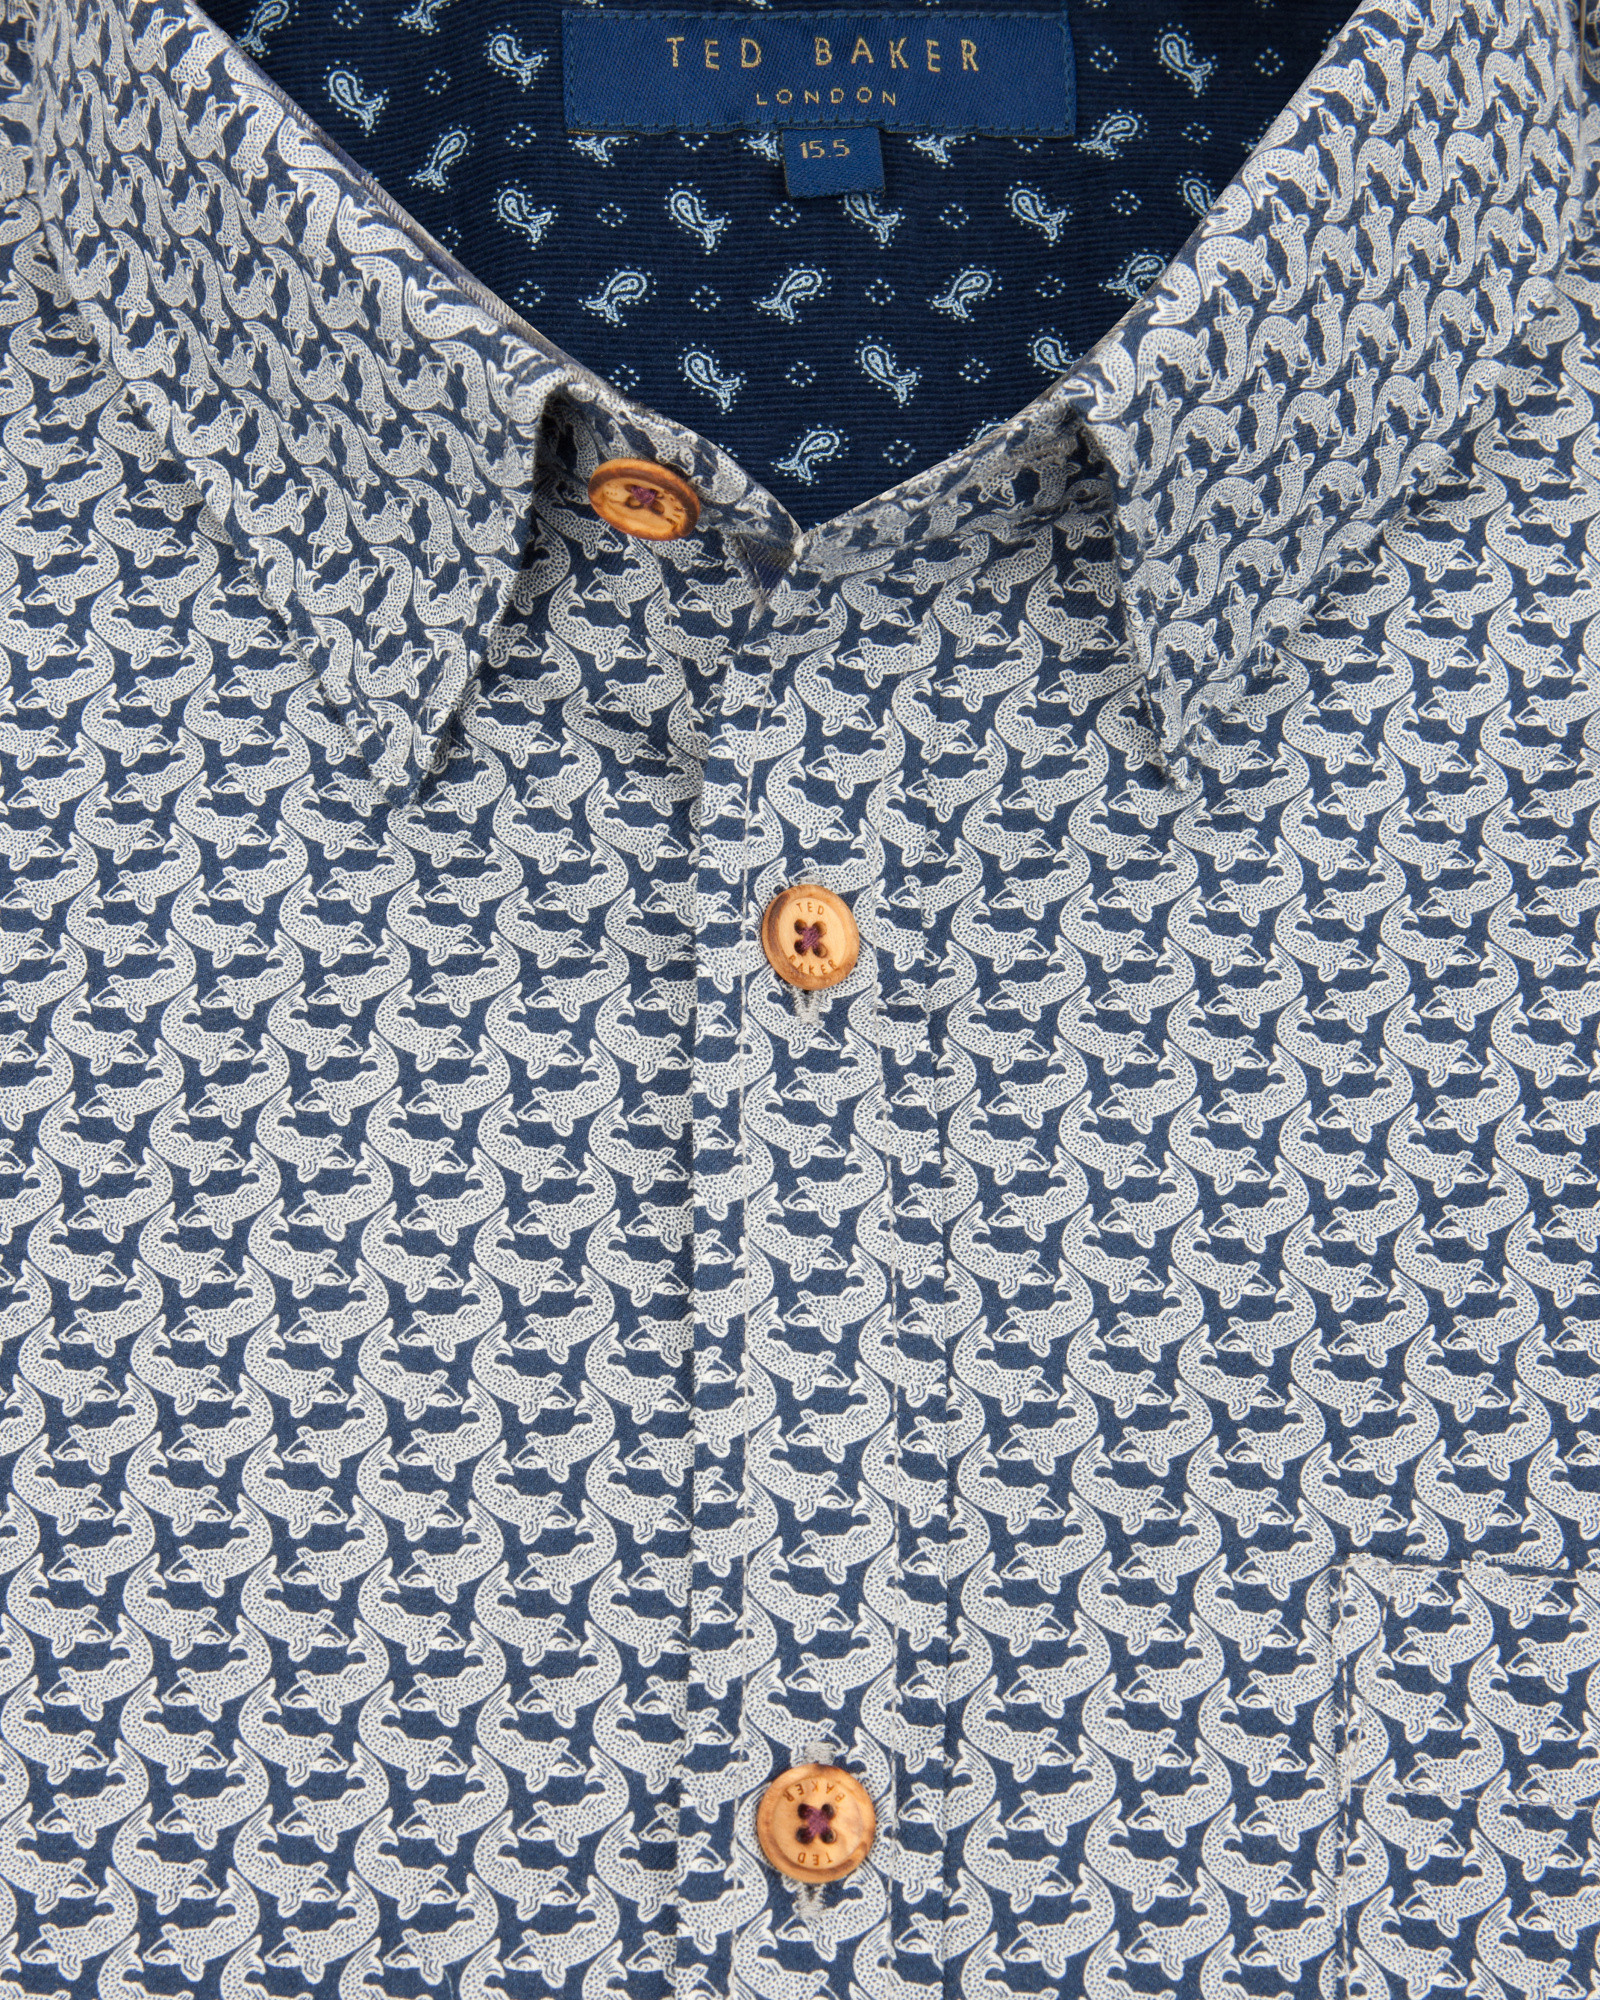 Ted Baker Fish Print Shirt in Navy (Blue) for Men - Lyst